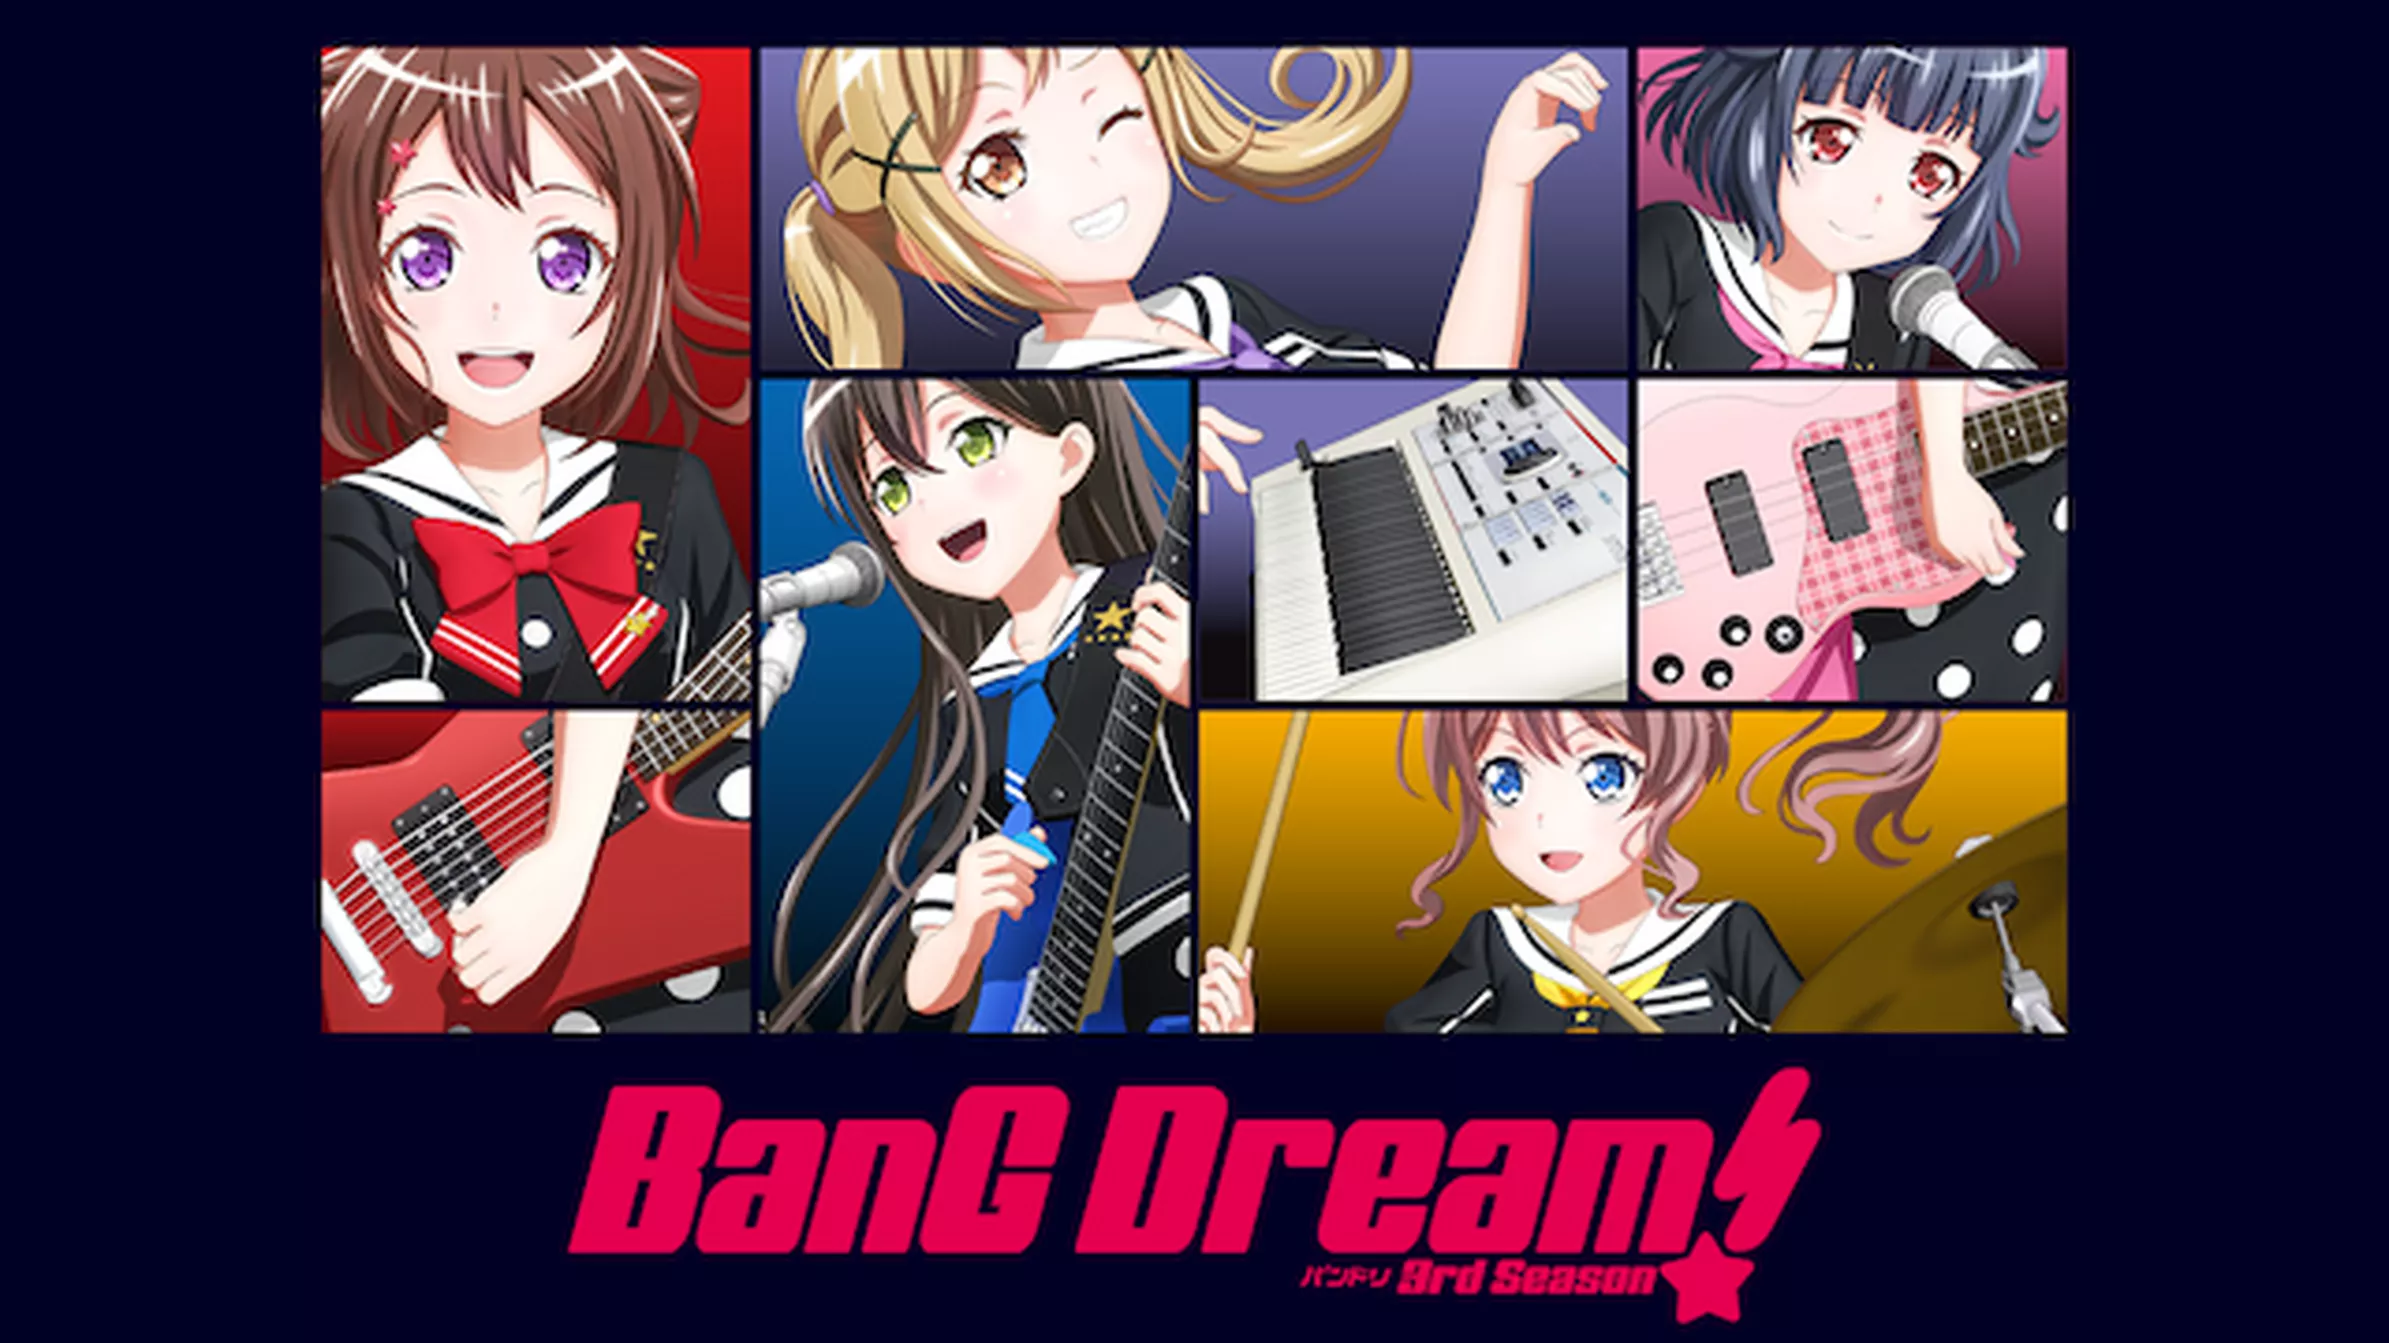 BanG Dream! 3rd Season(アニメ / 2020) - 動画配信 | U-NEXT 31 